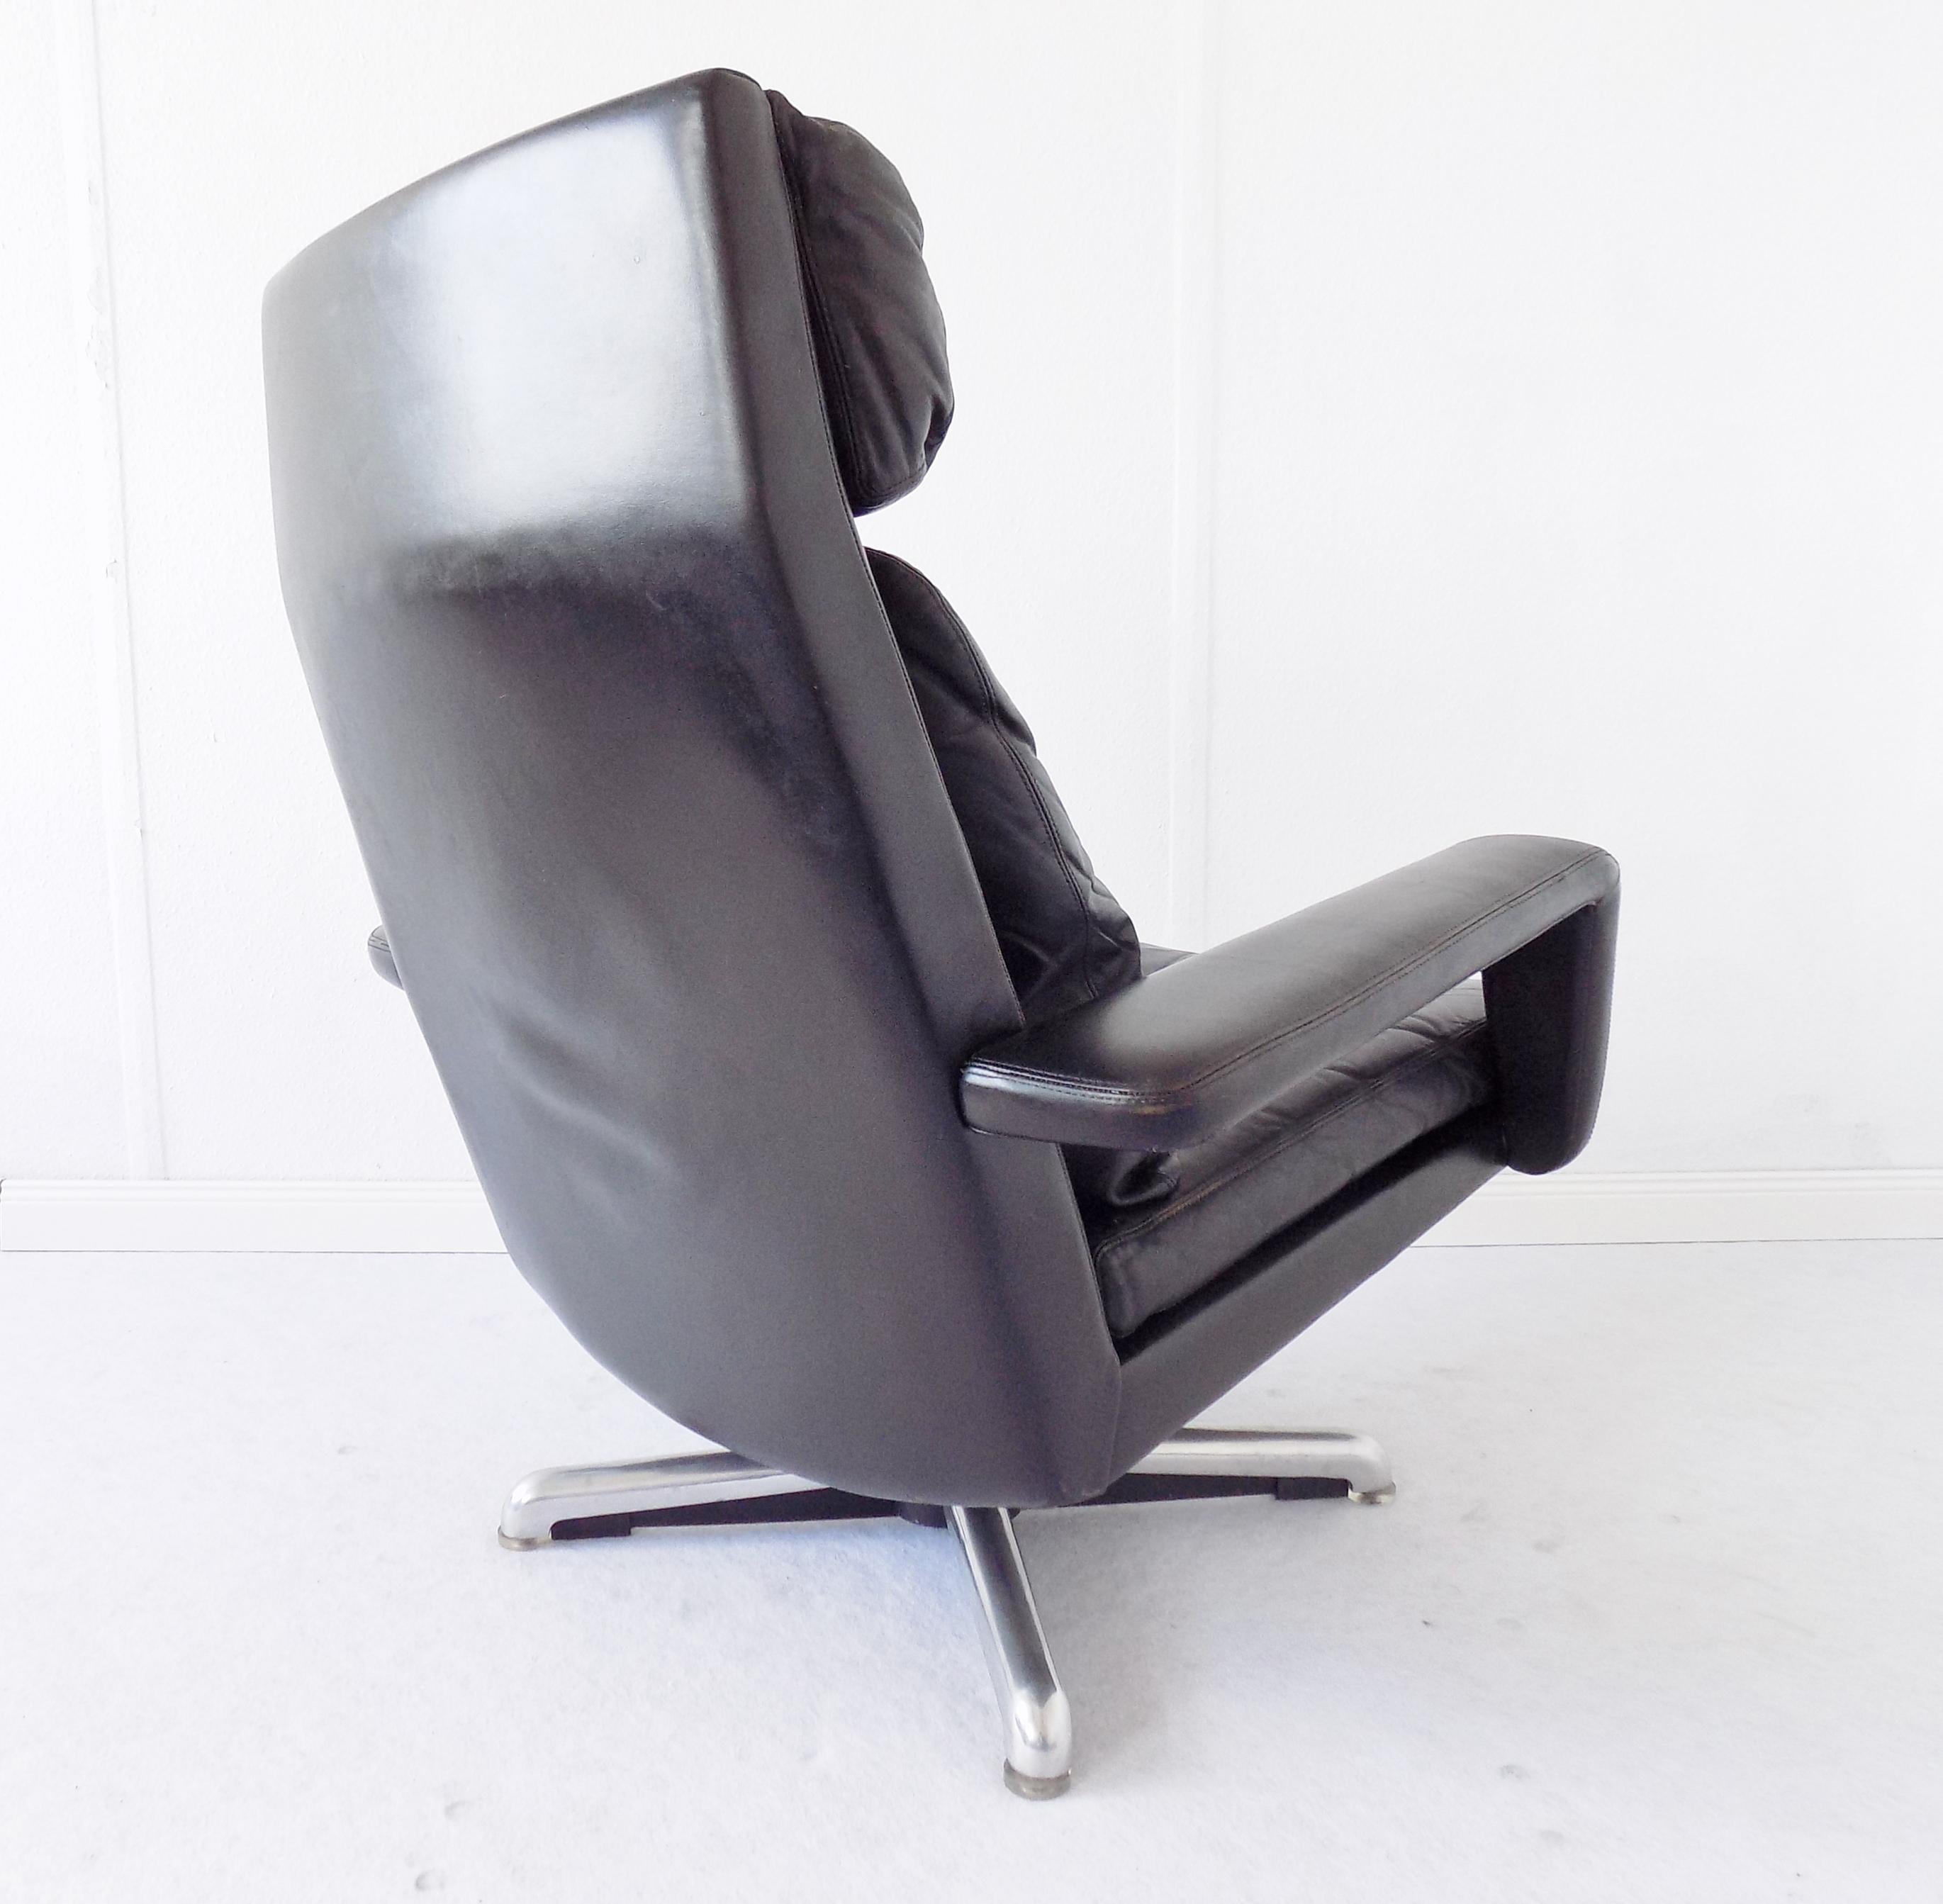 Hans Kaufeld Lounge Chair, German, Black leather, mid-century modern, swivel For Sale 1